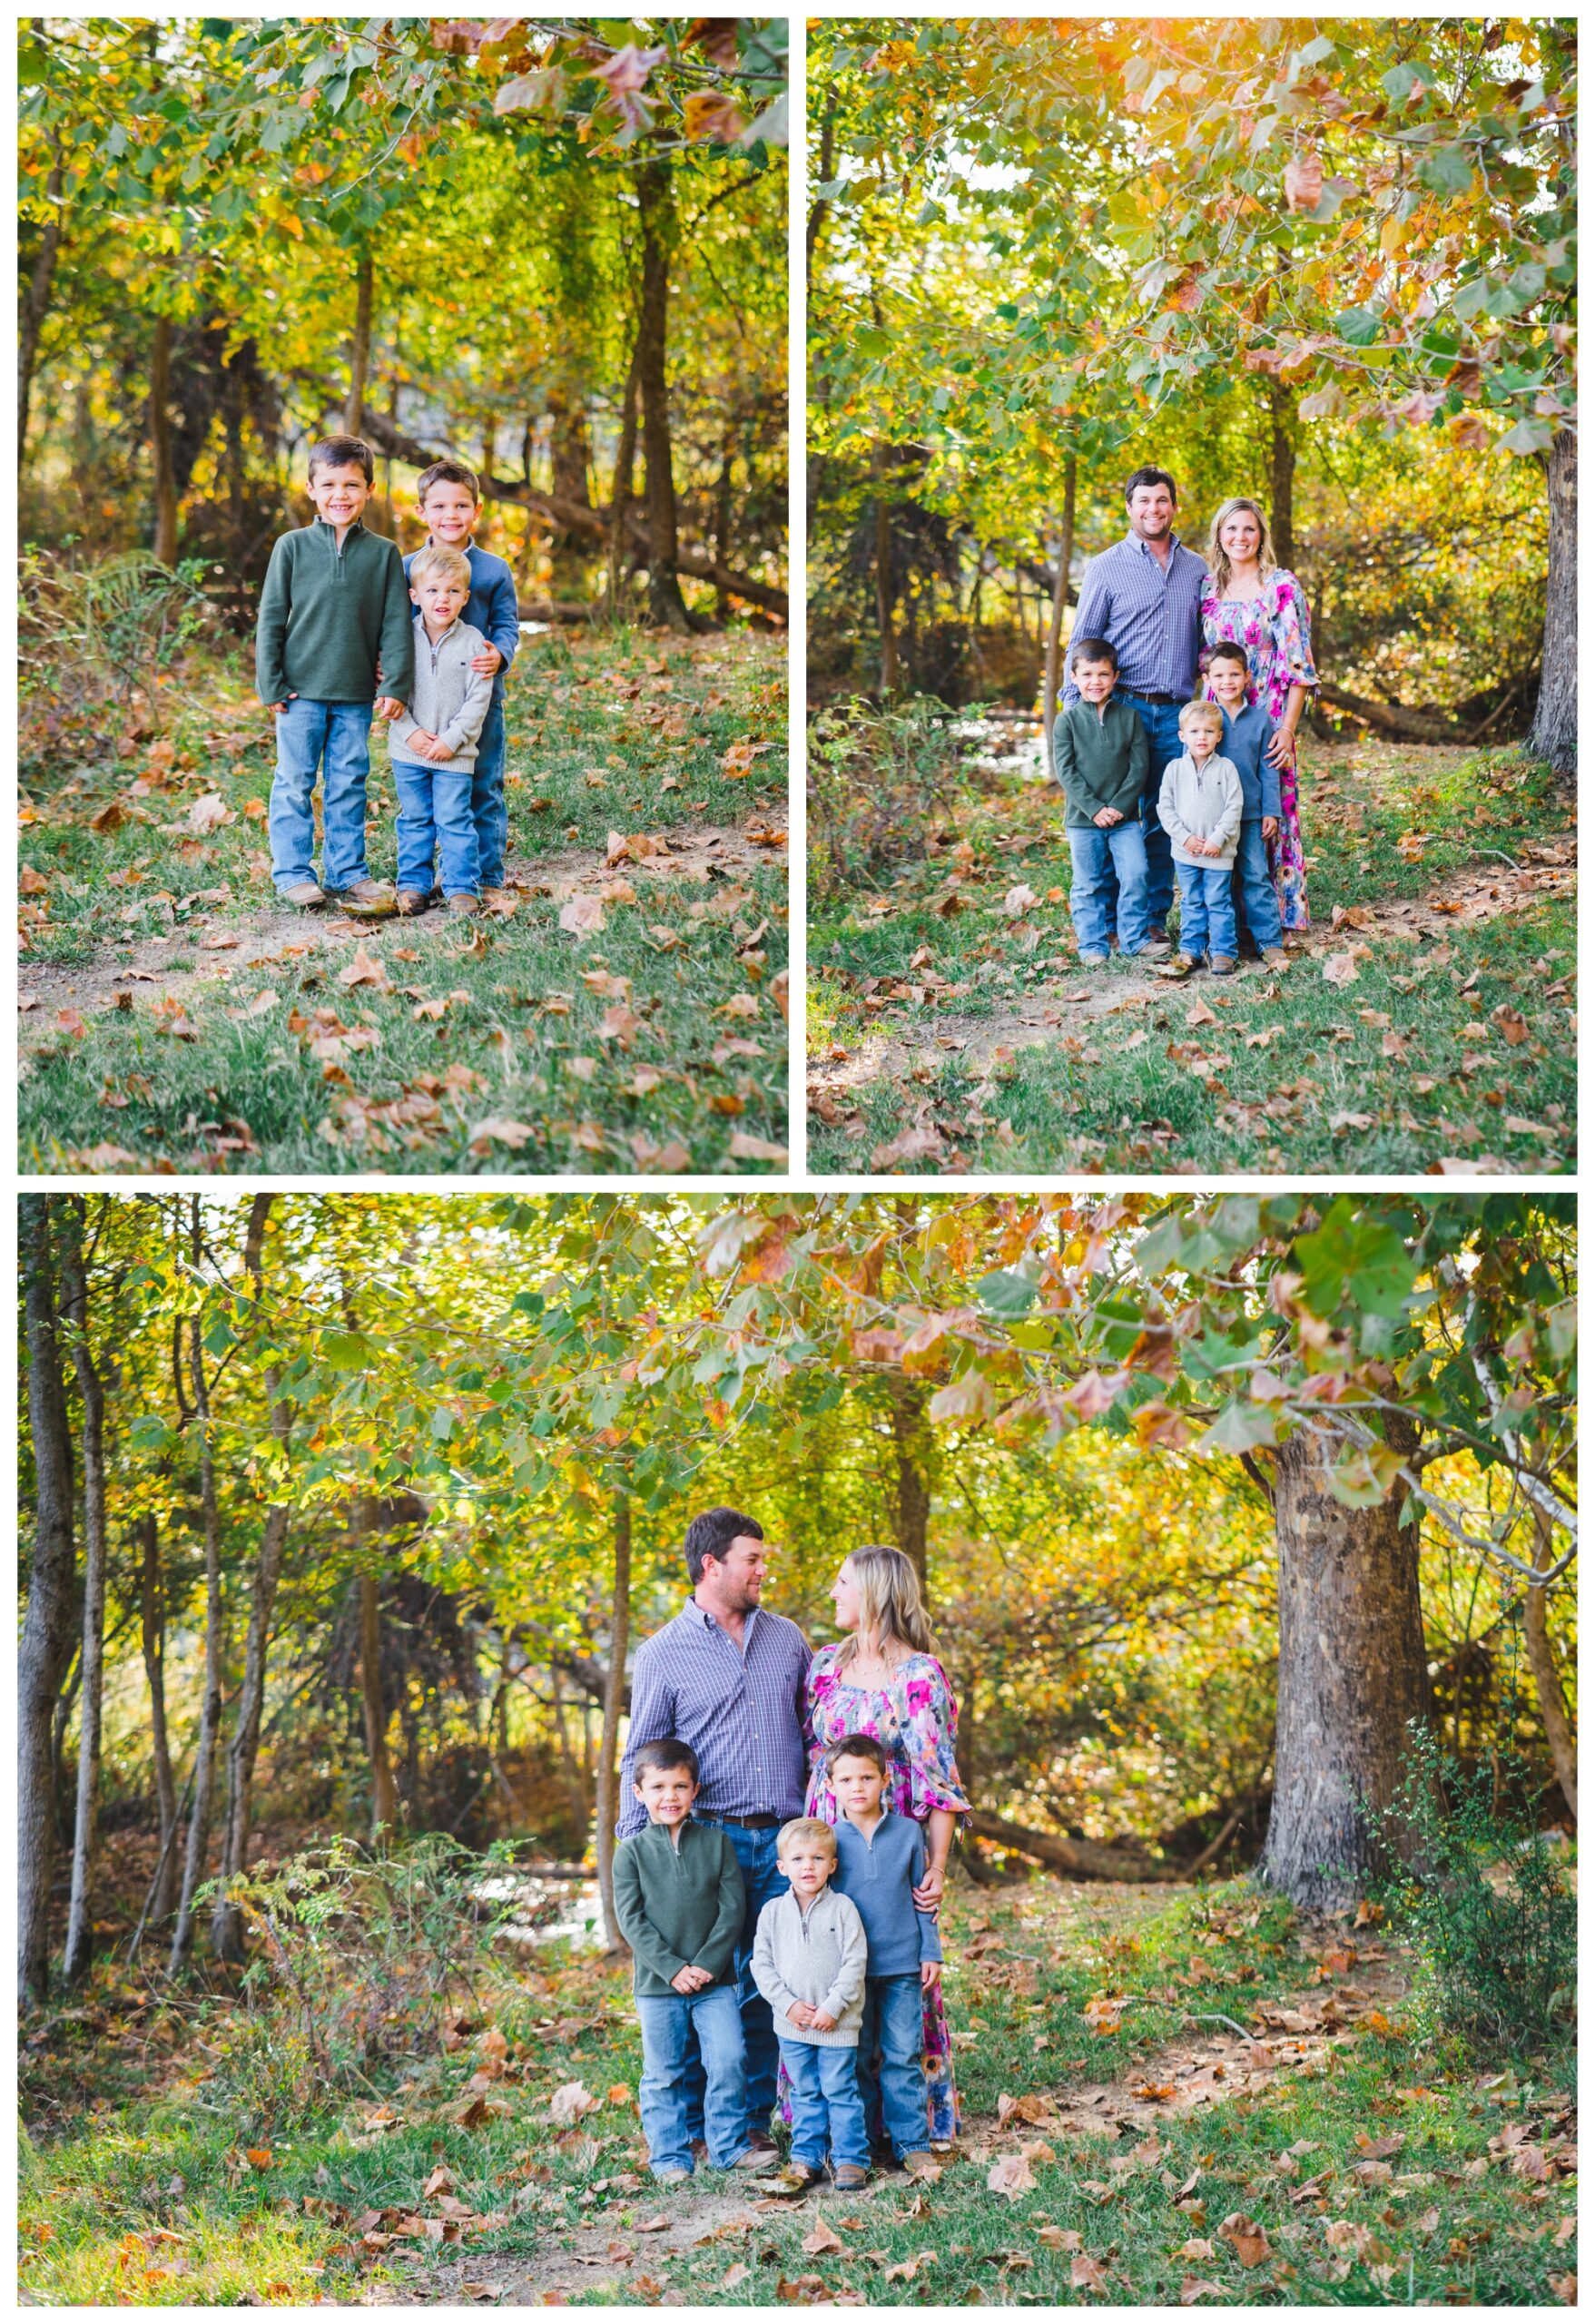 Fall family photos with pretty trees | Melissa Sheridan Photography